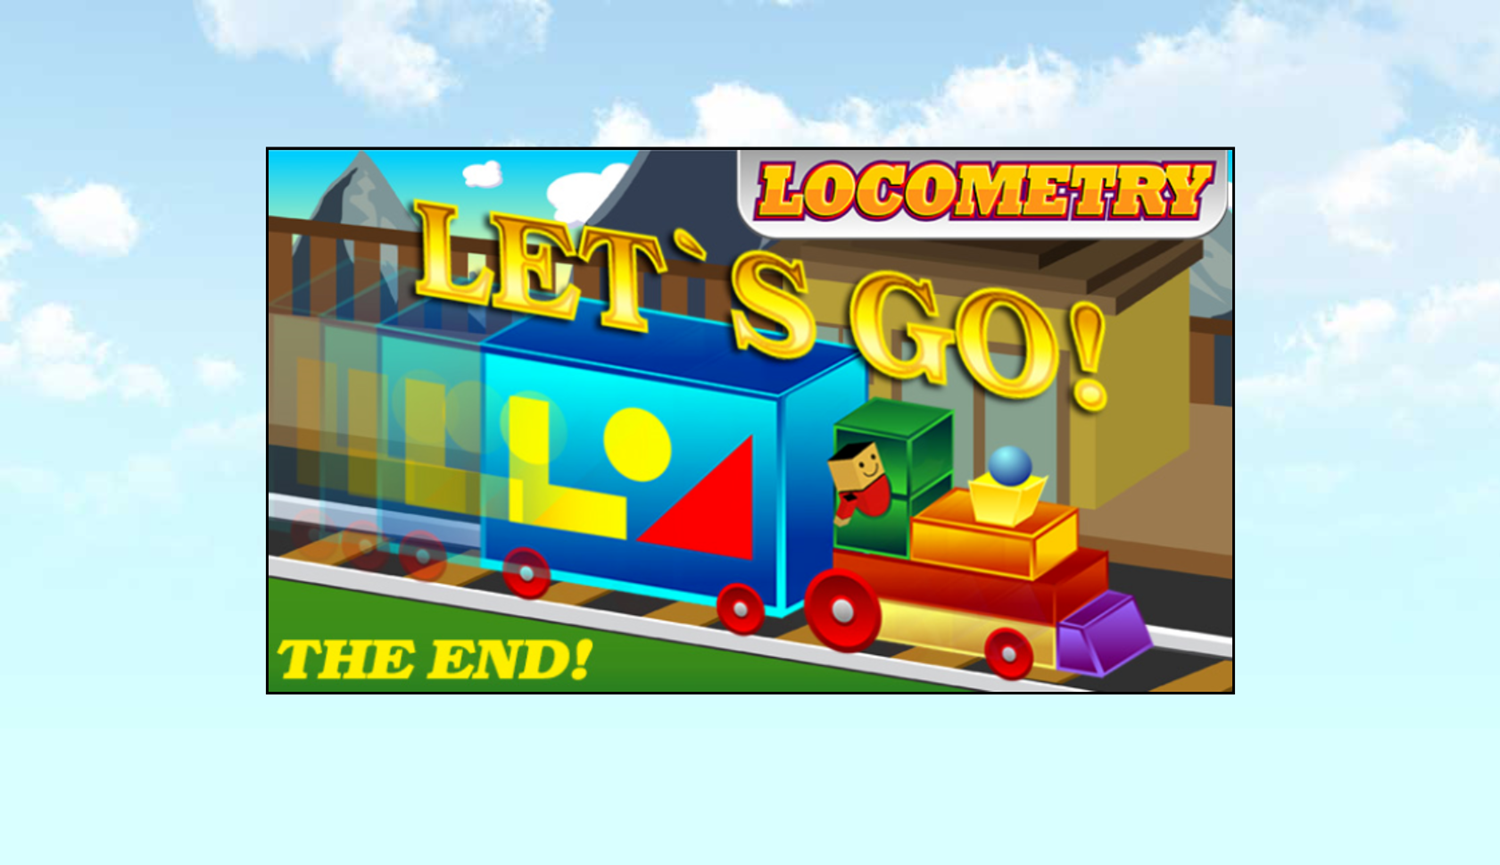 Locometry Game Complete Screenshot.